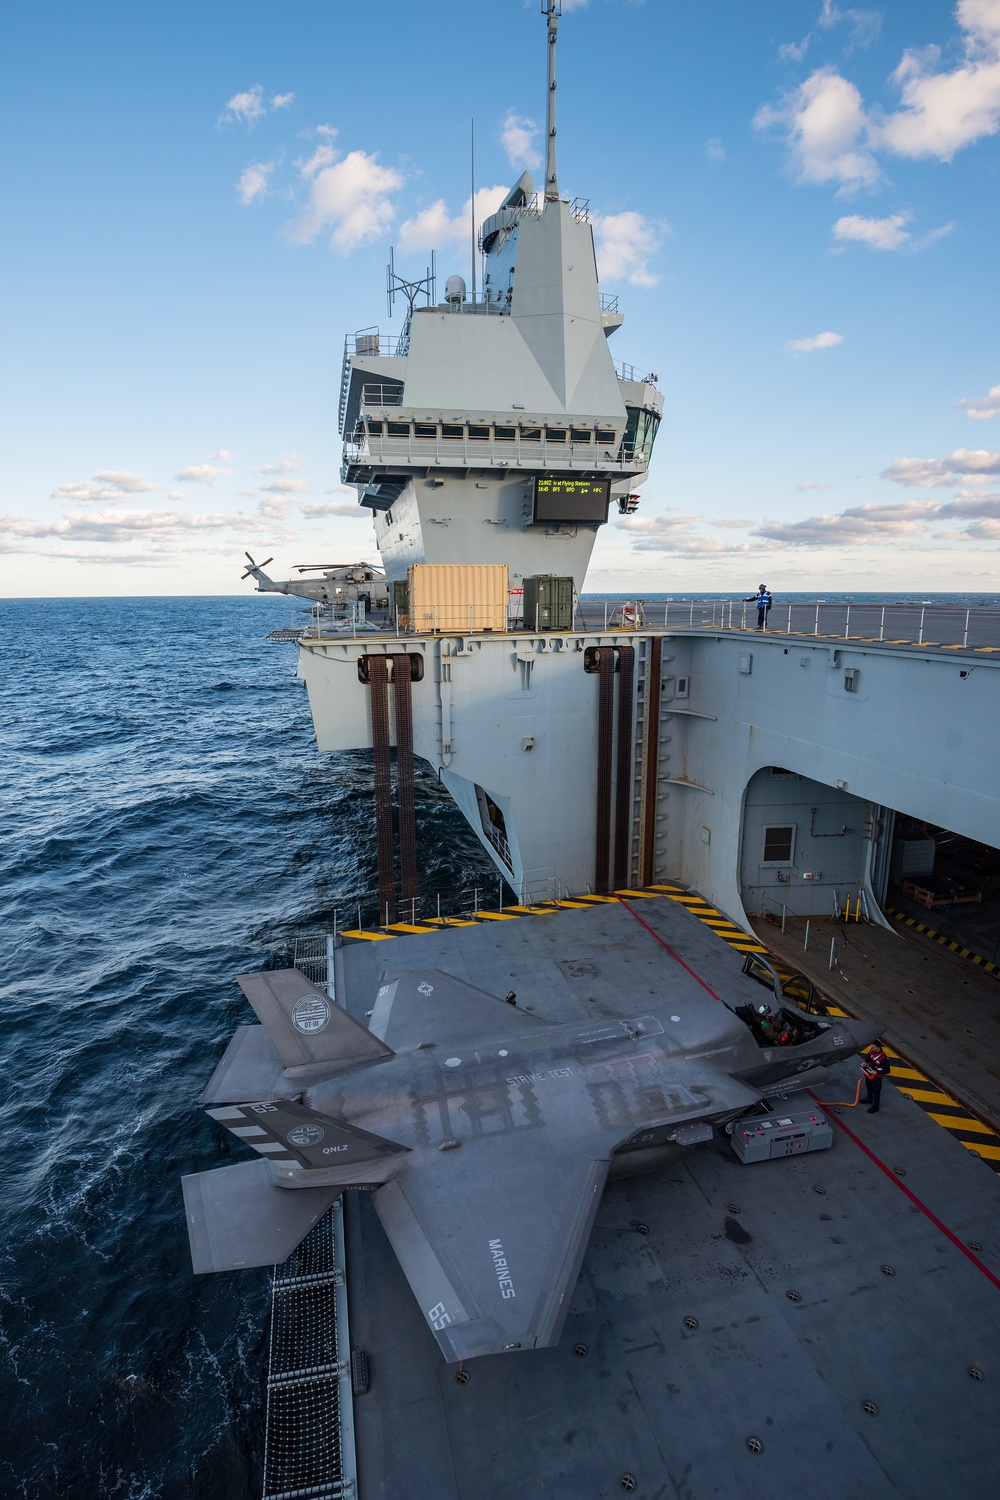 Pax ITF returns to HMS Queen Elizabeth for DT-2, week 1